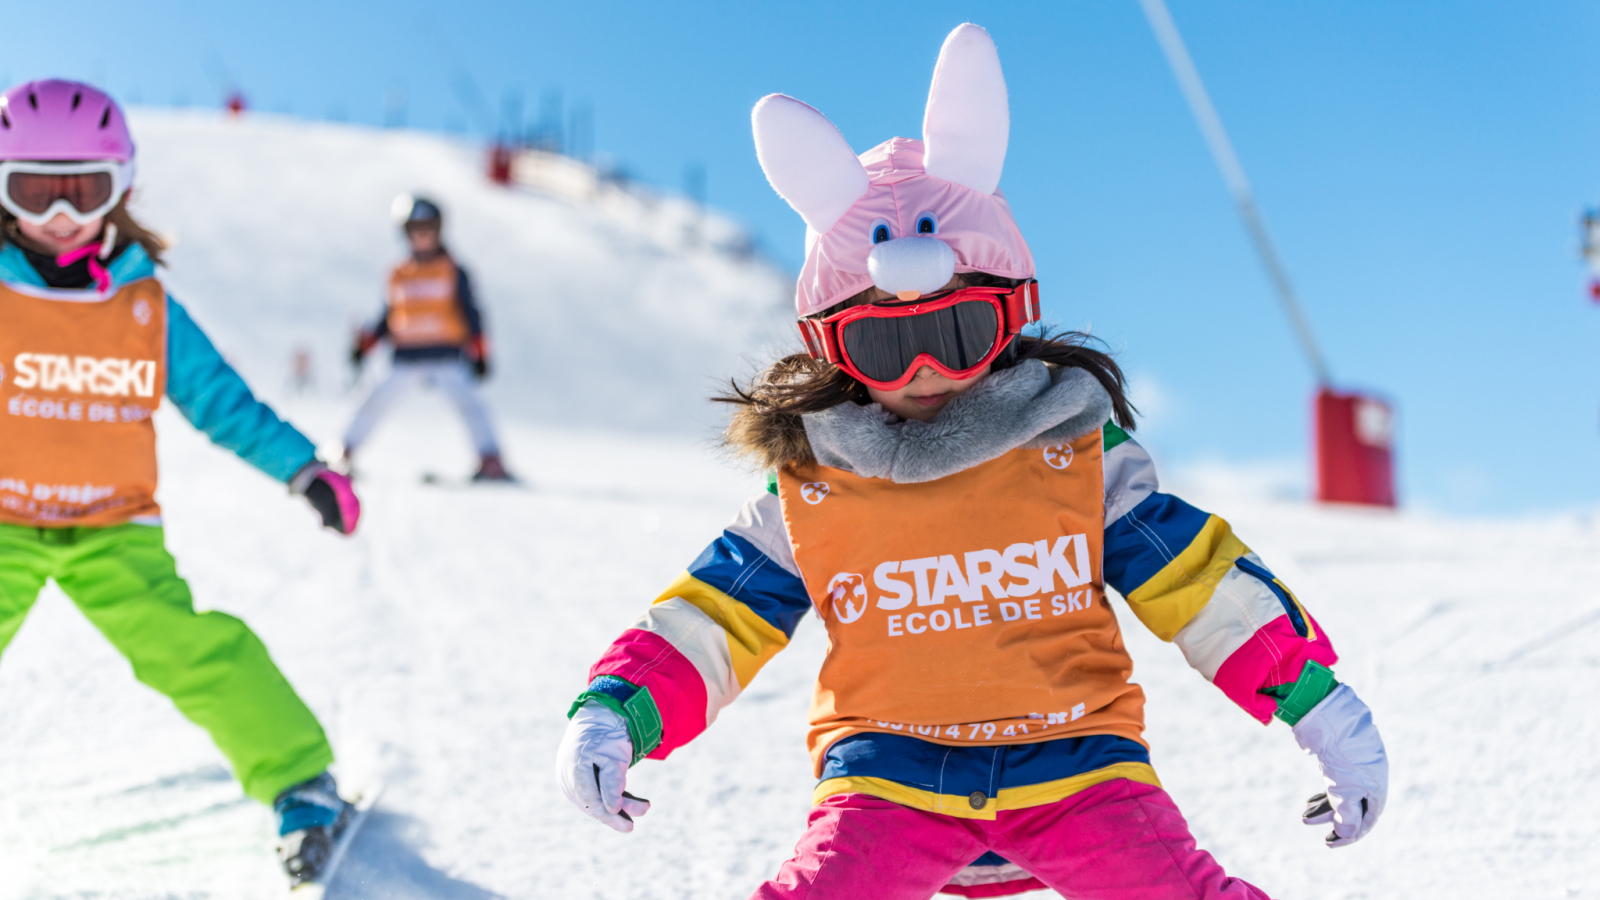 Children learn to ski whilst having fun.